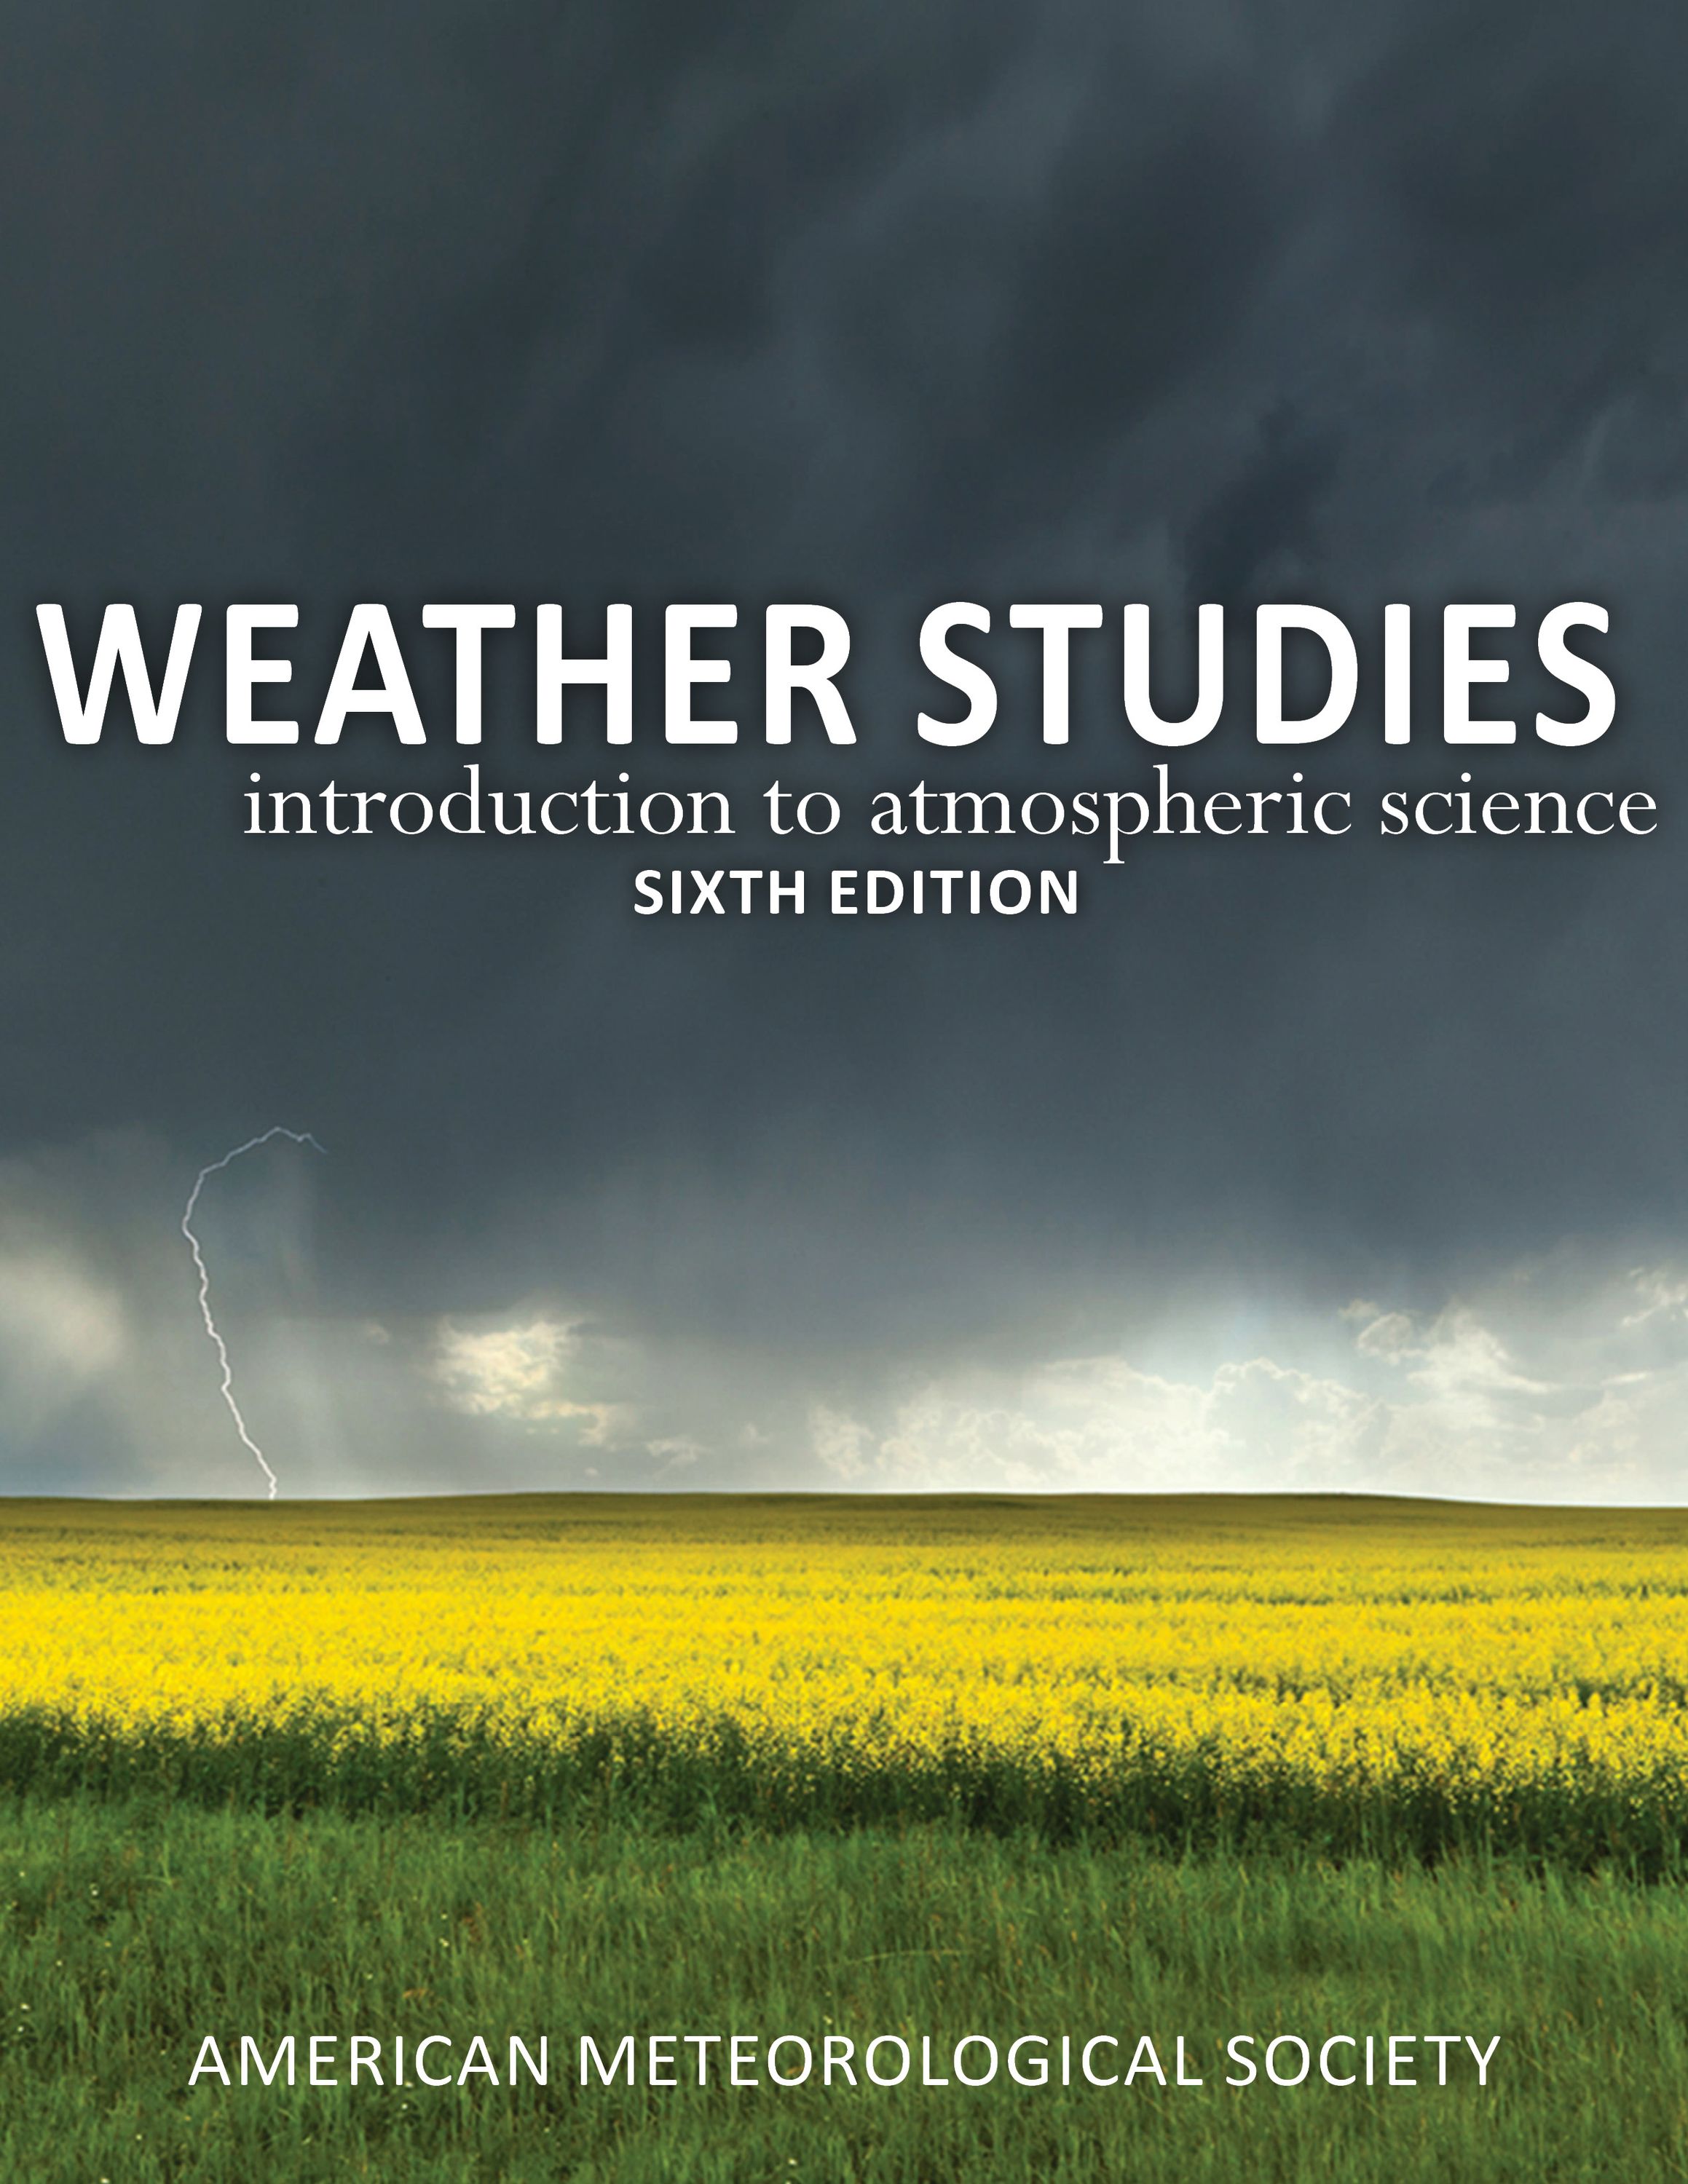 Weather Studies Investigation Manual Answers 9a technologyskiey